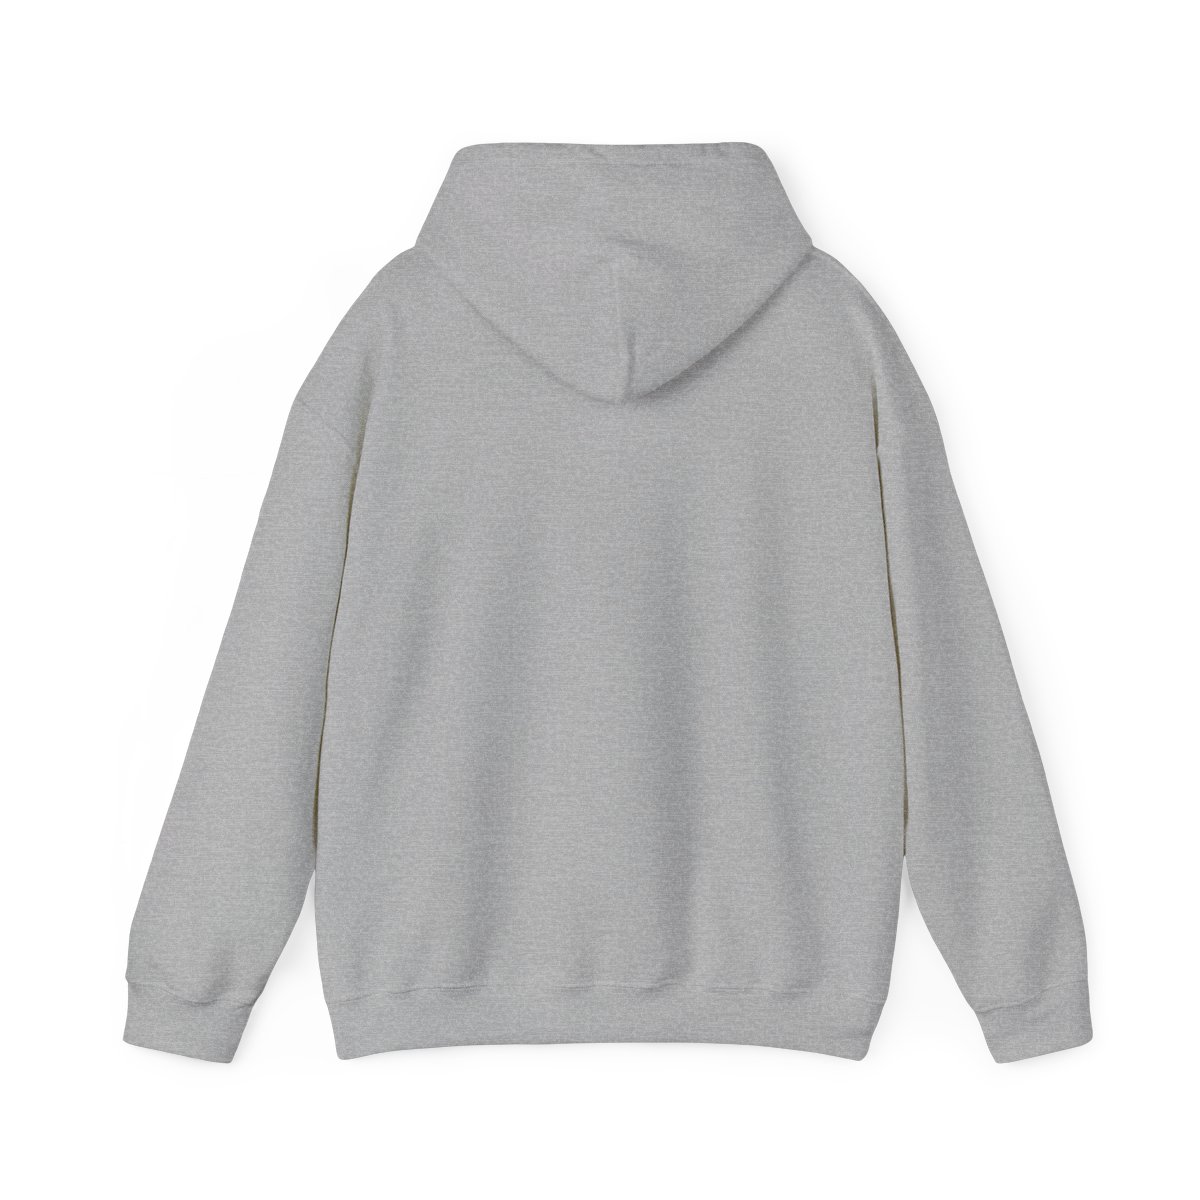 2023 Unisex Heavy Blend™ Hooded Sweatshirt product thumbnail image